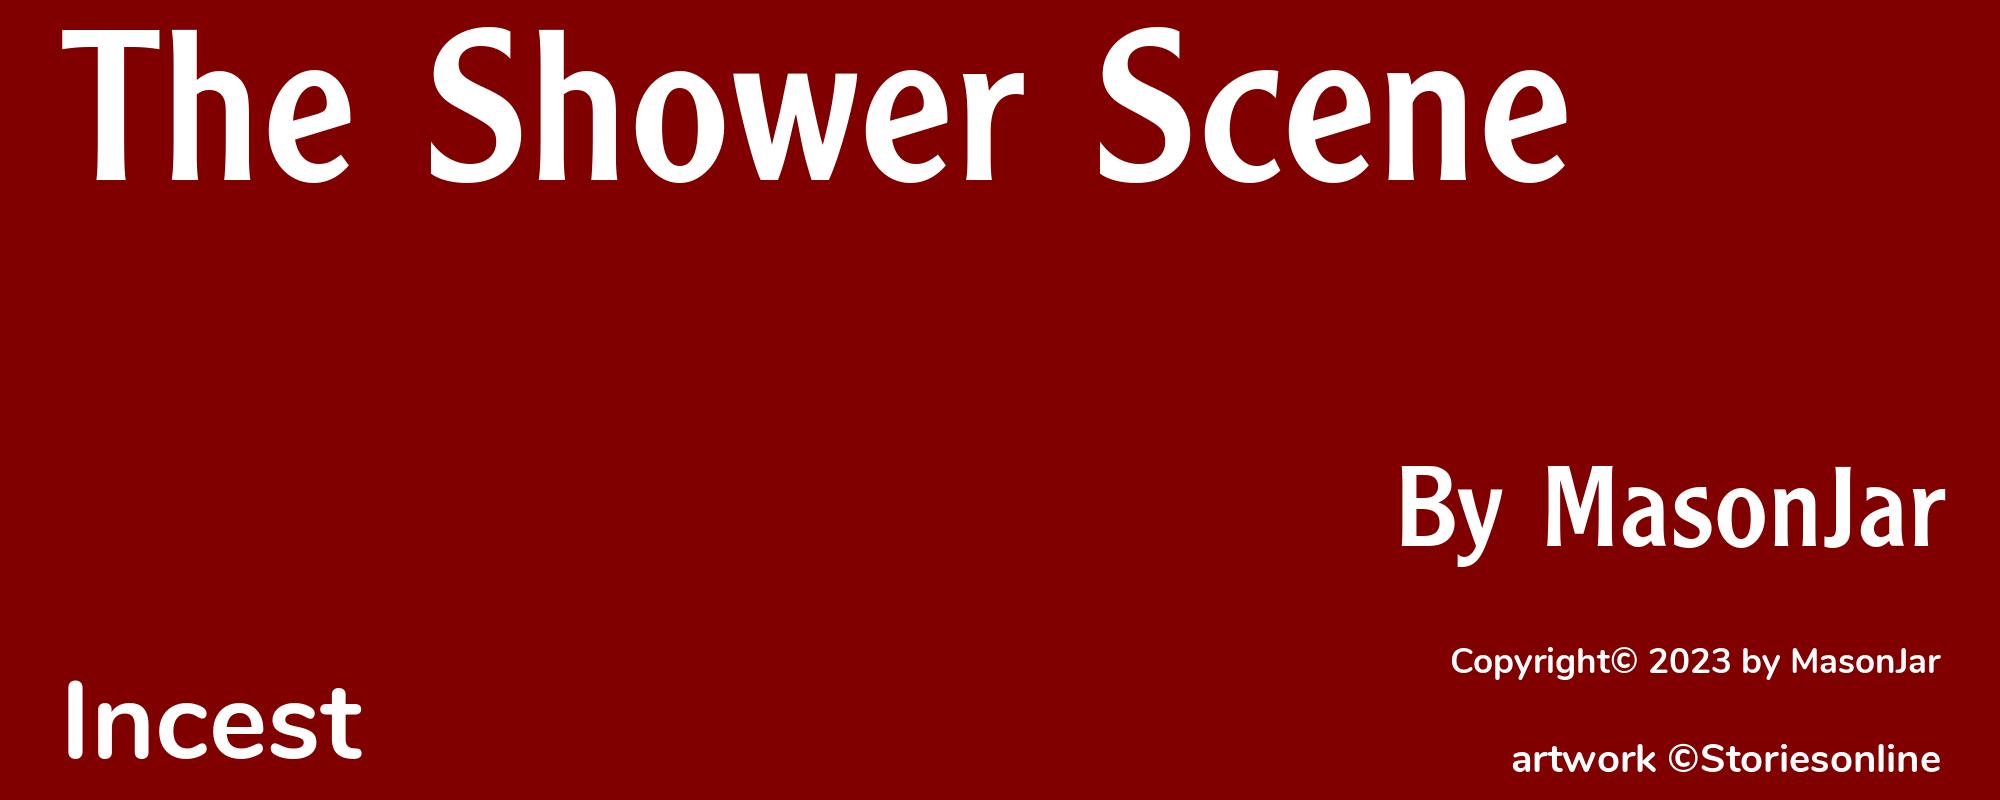 The Shower Scene - Cover